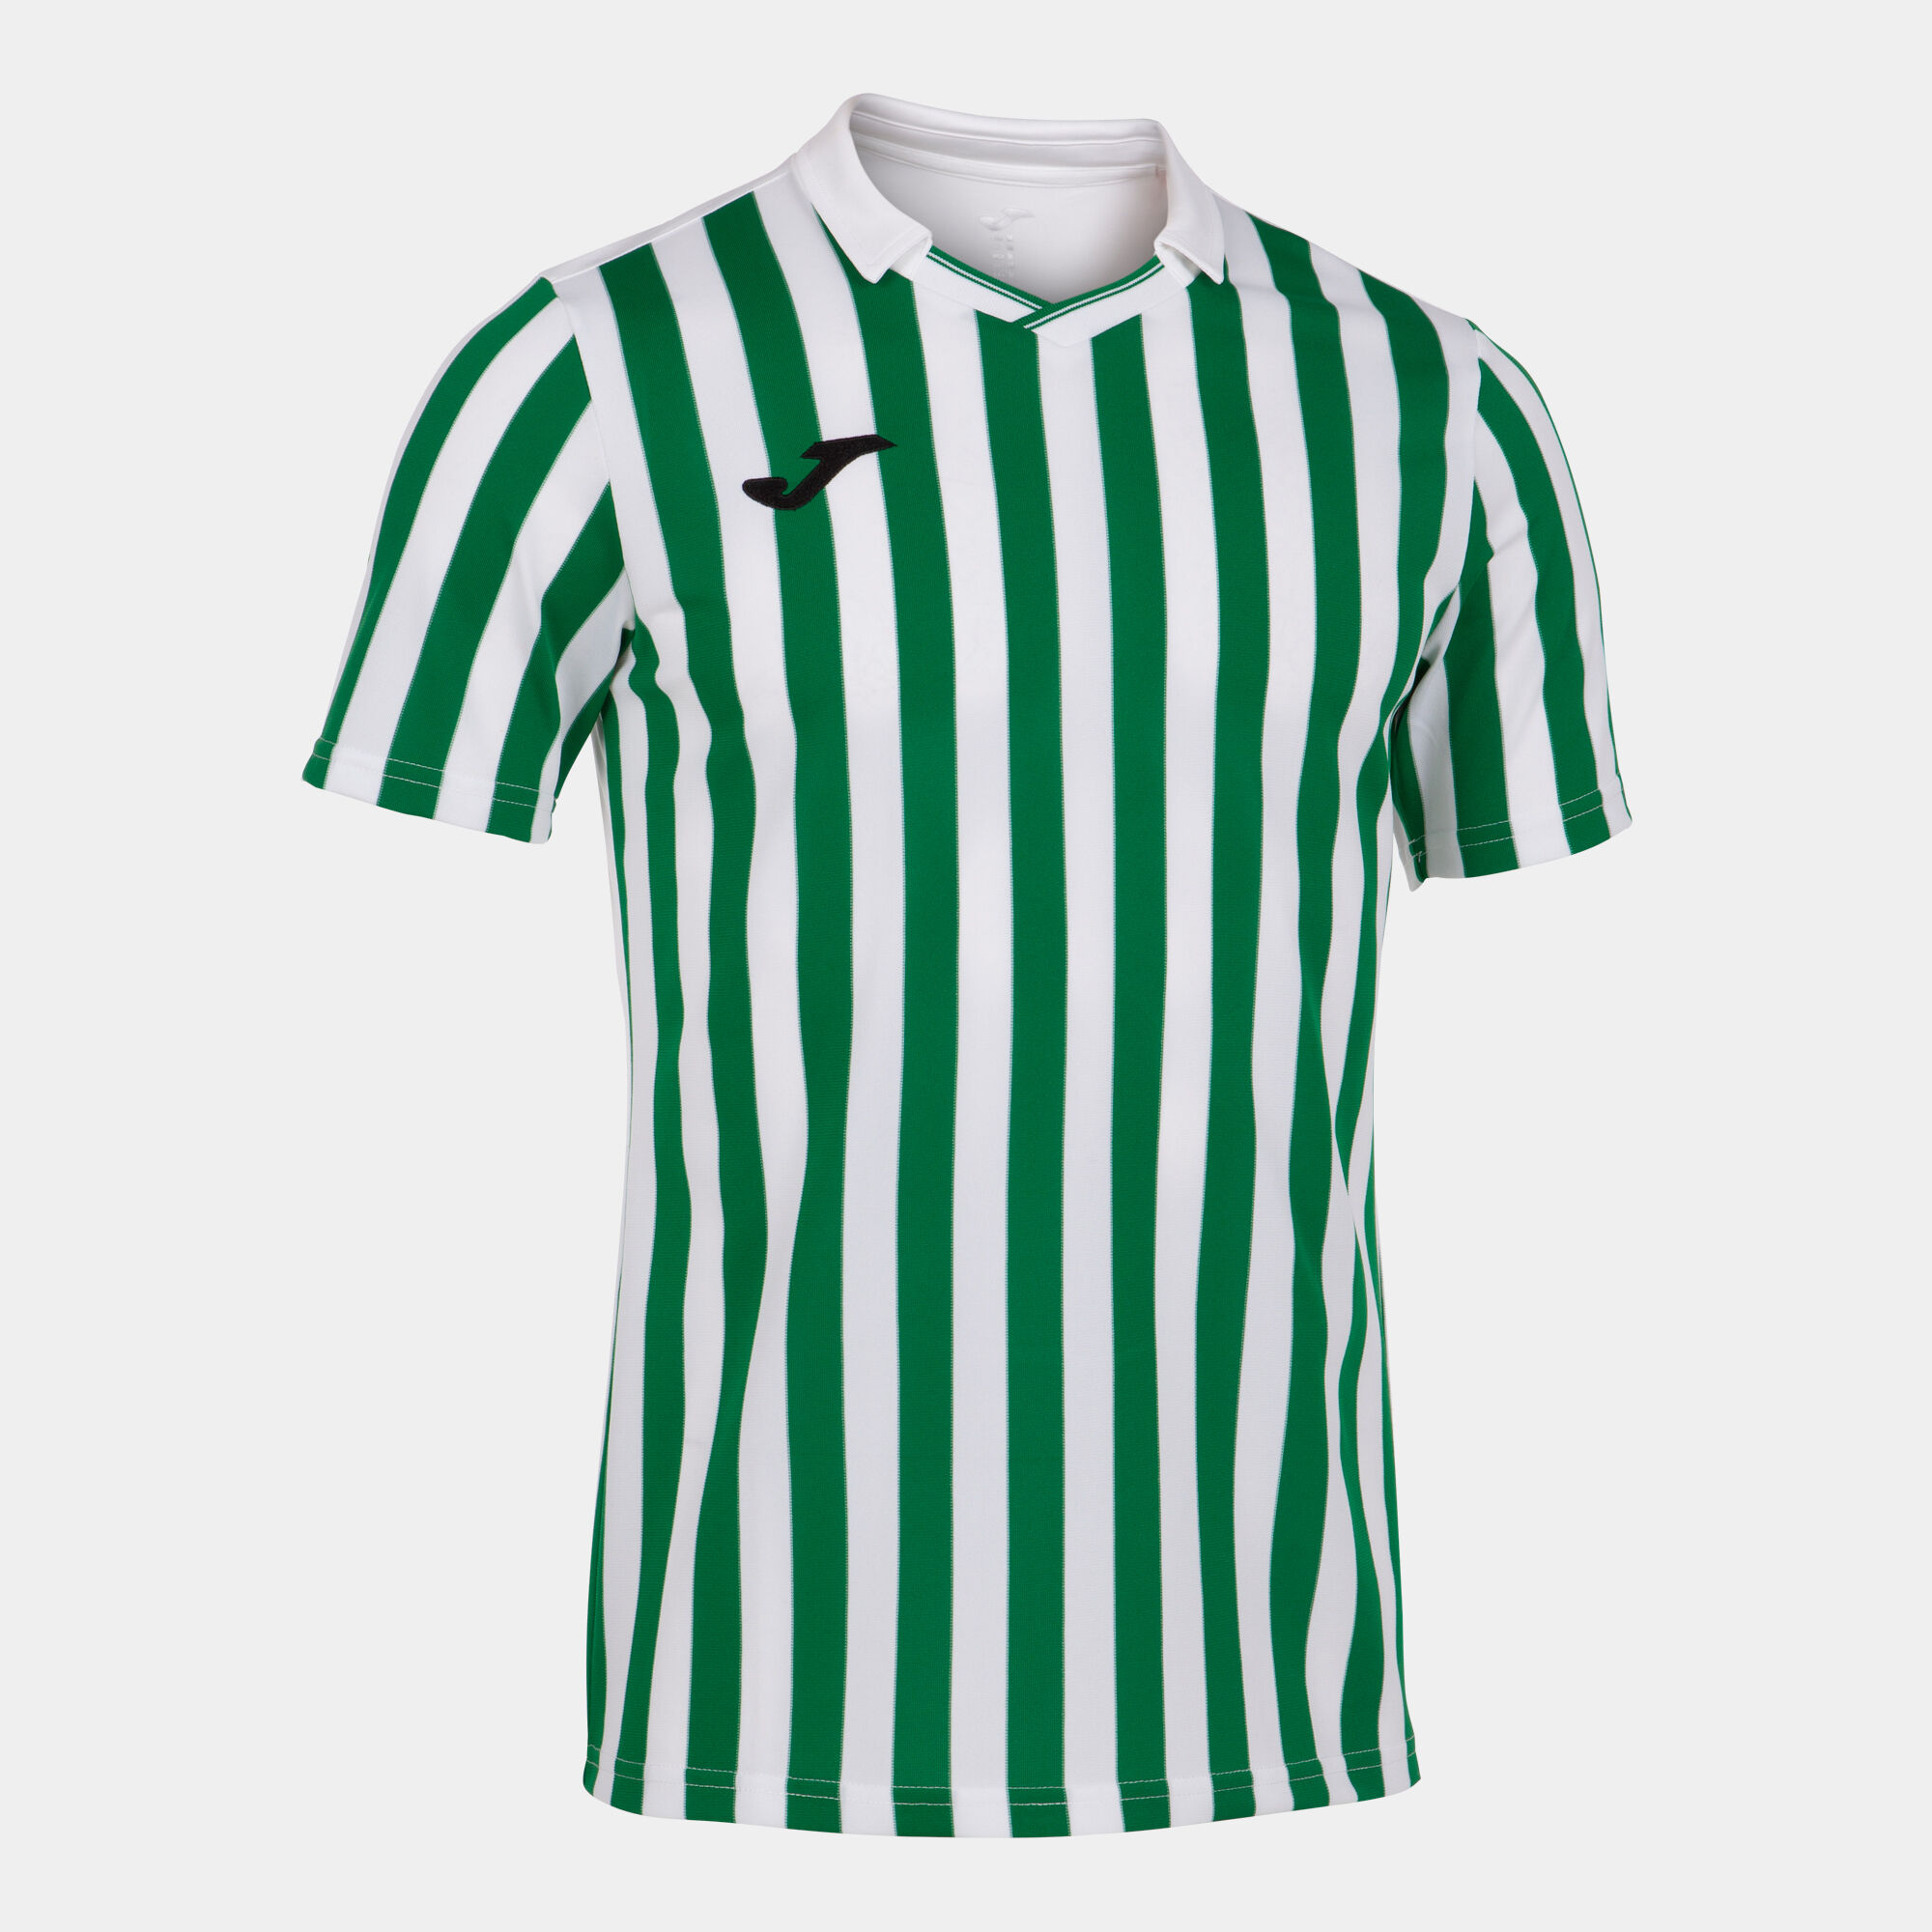 Camiseta manga corta hombre Copa II blanco verde